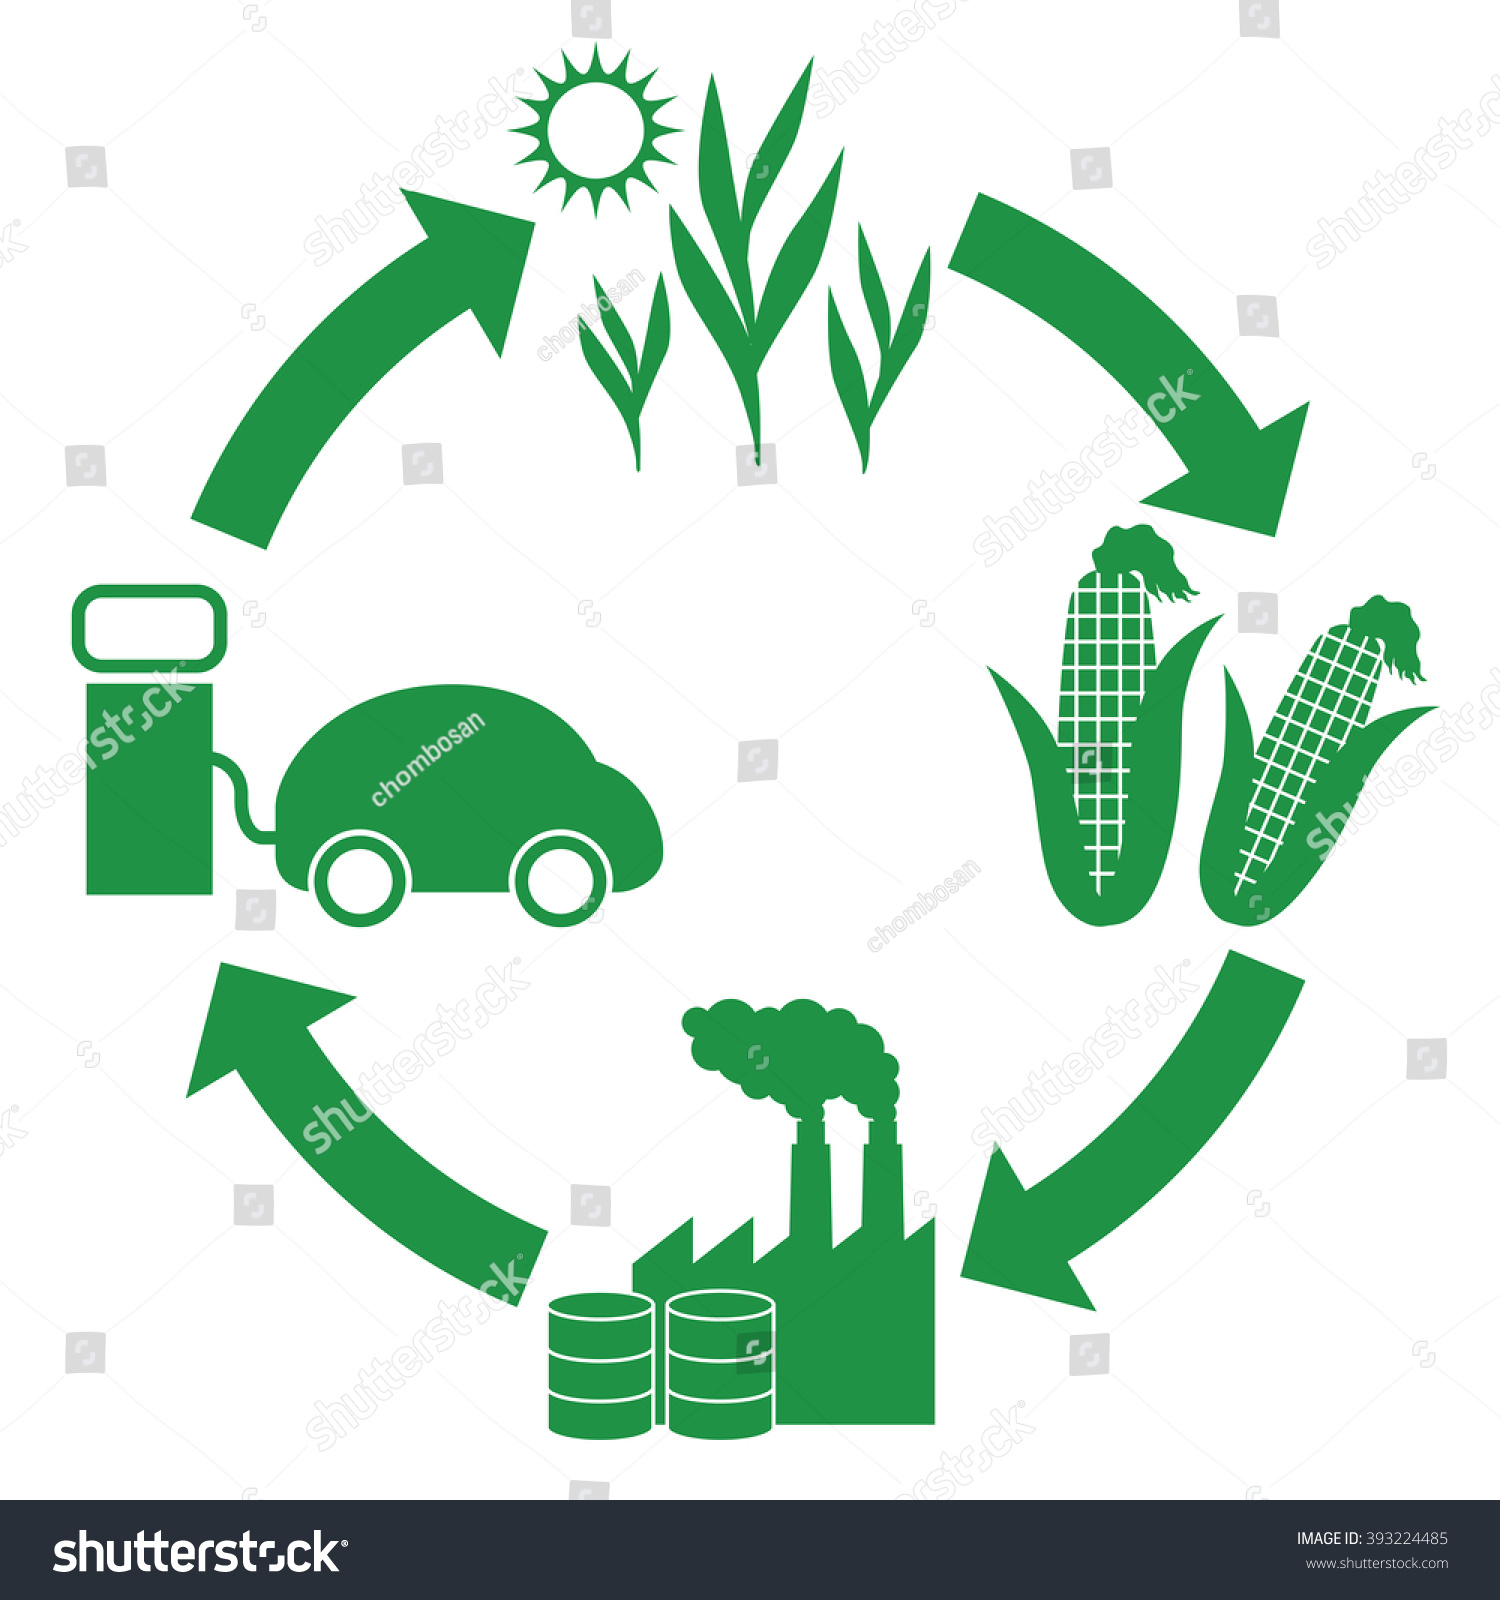 Biofuel Biomass Ethanol Life Cycle Diagram Stock Vector ...